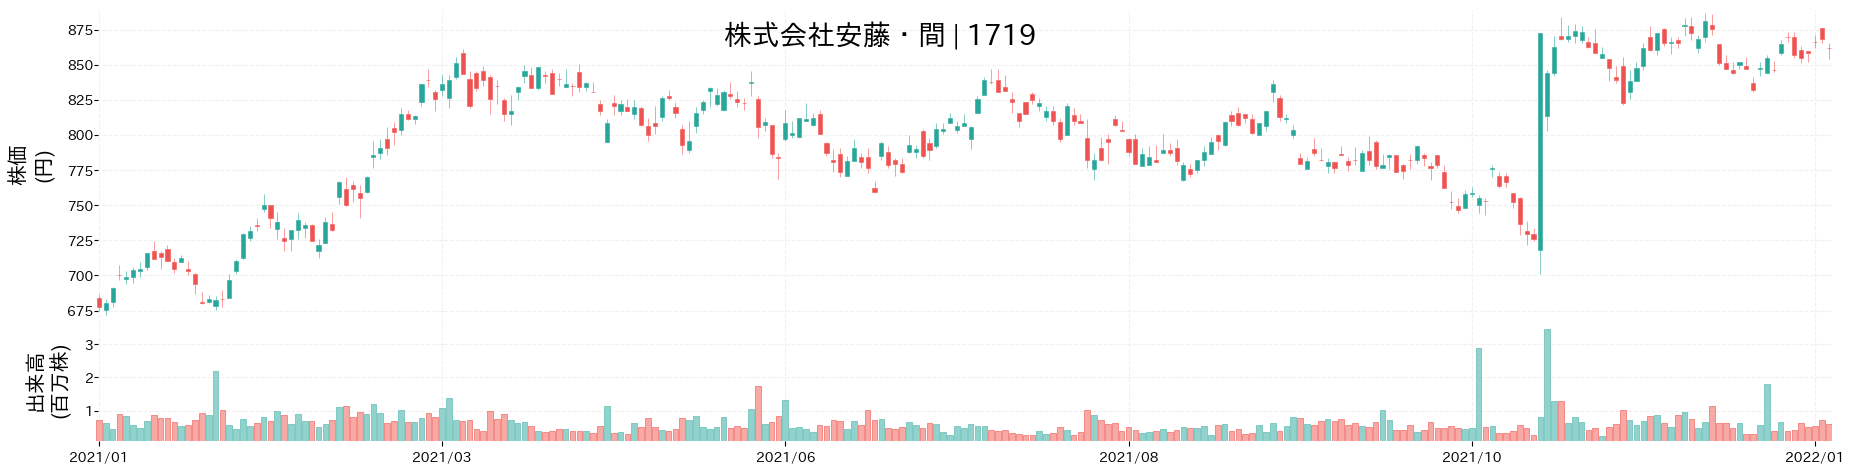 安藤・間の株価推移(2021)